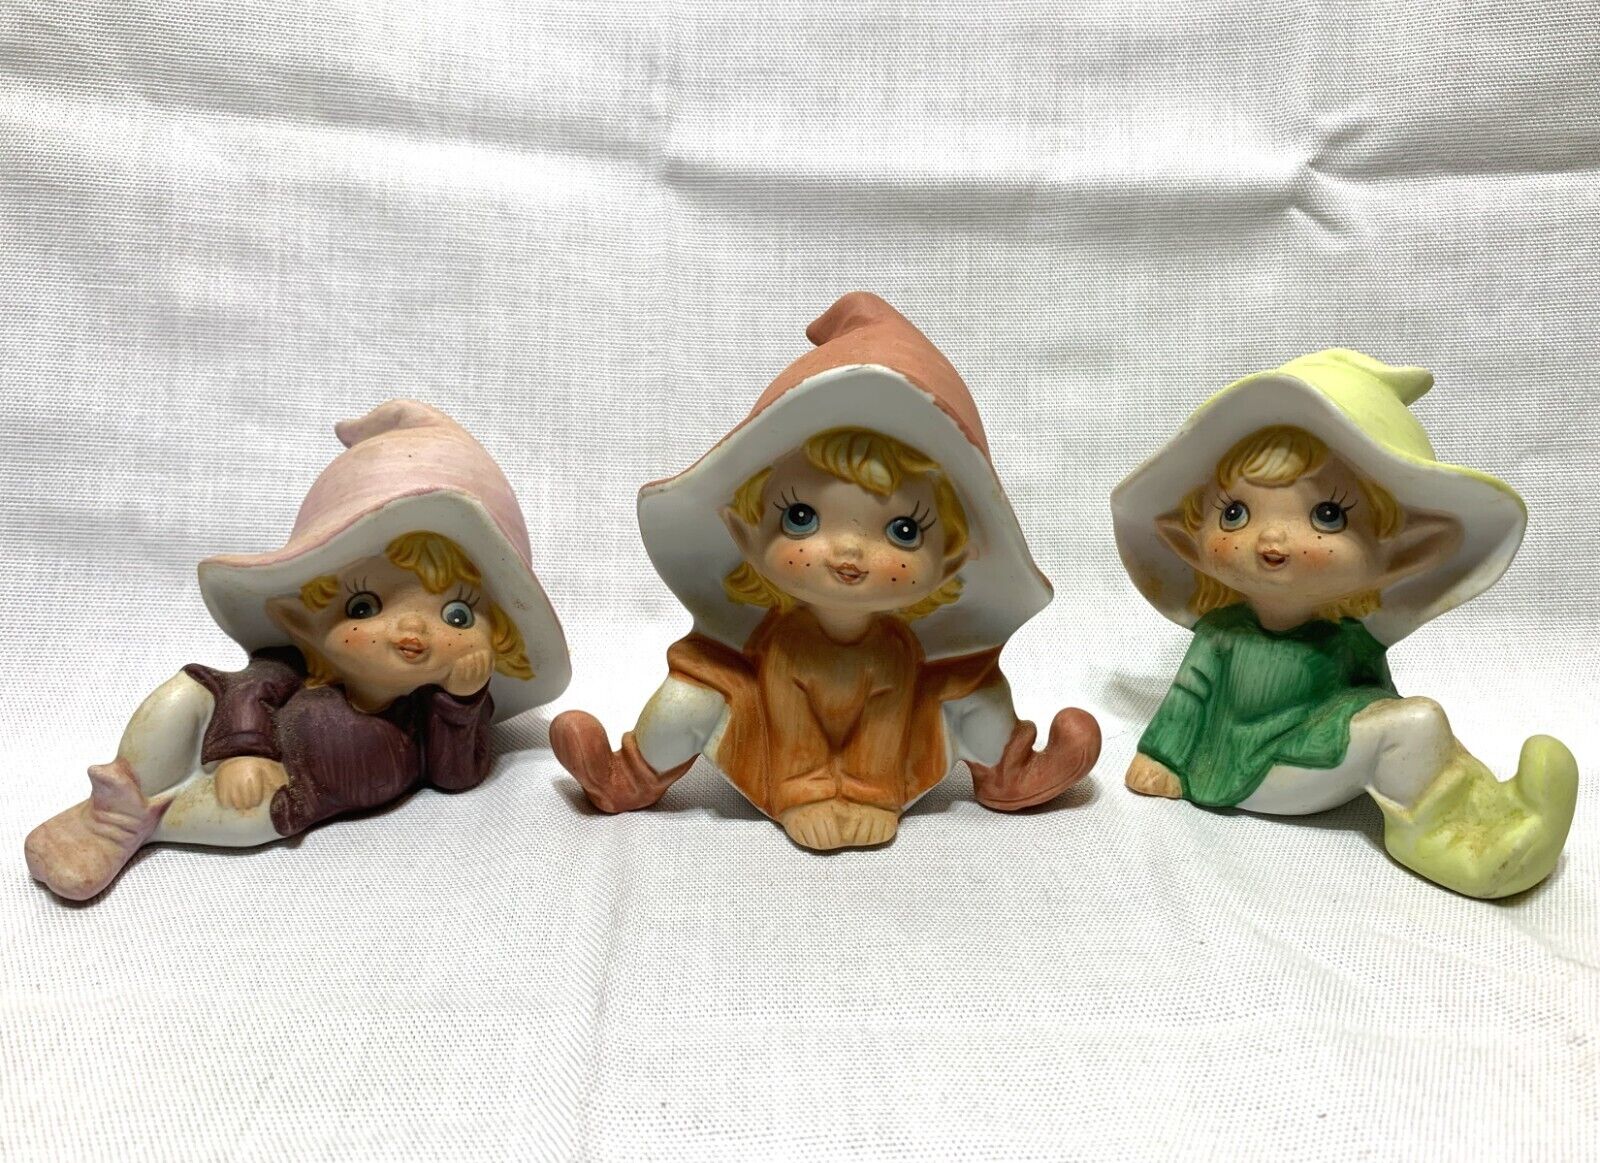 Vintage Homco Garden Pixies Elves Fairies Ceramic Figurines #5213 Set of All 3